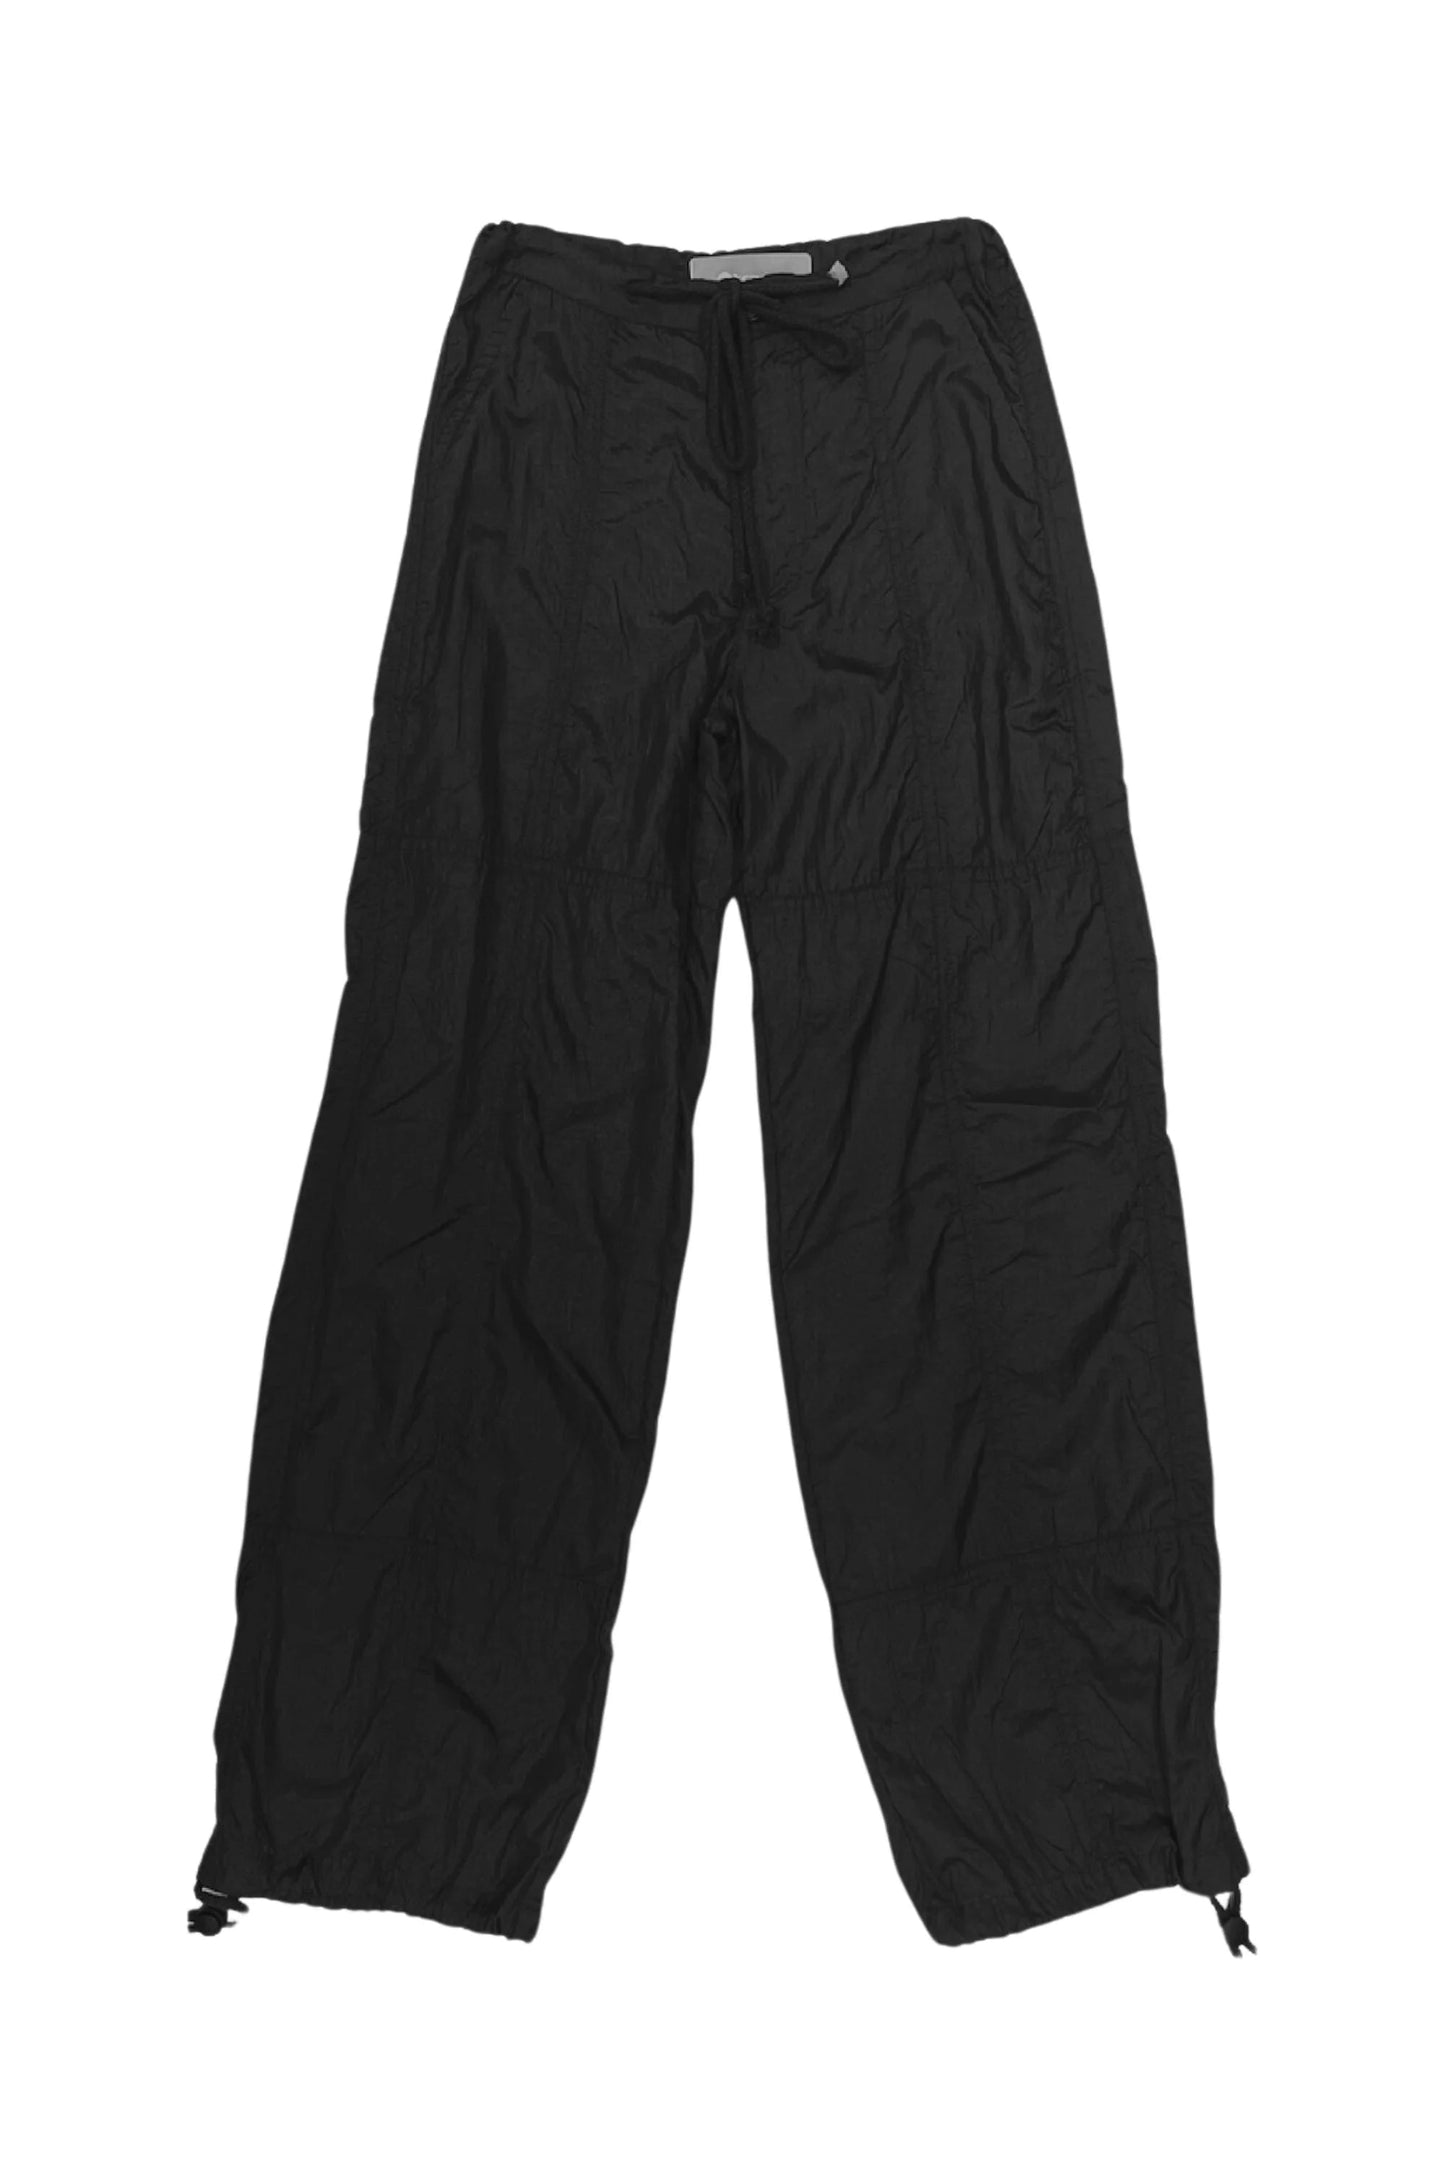 Glossy Black Parachute Pants 160 GIRLS APPAREL TWEEN 7-16 Tractr 7 